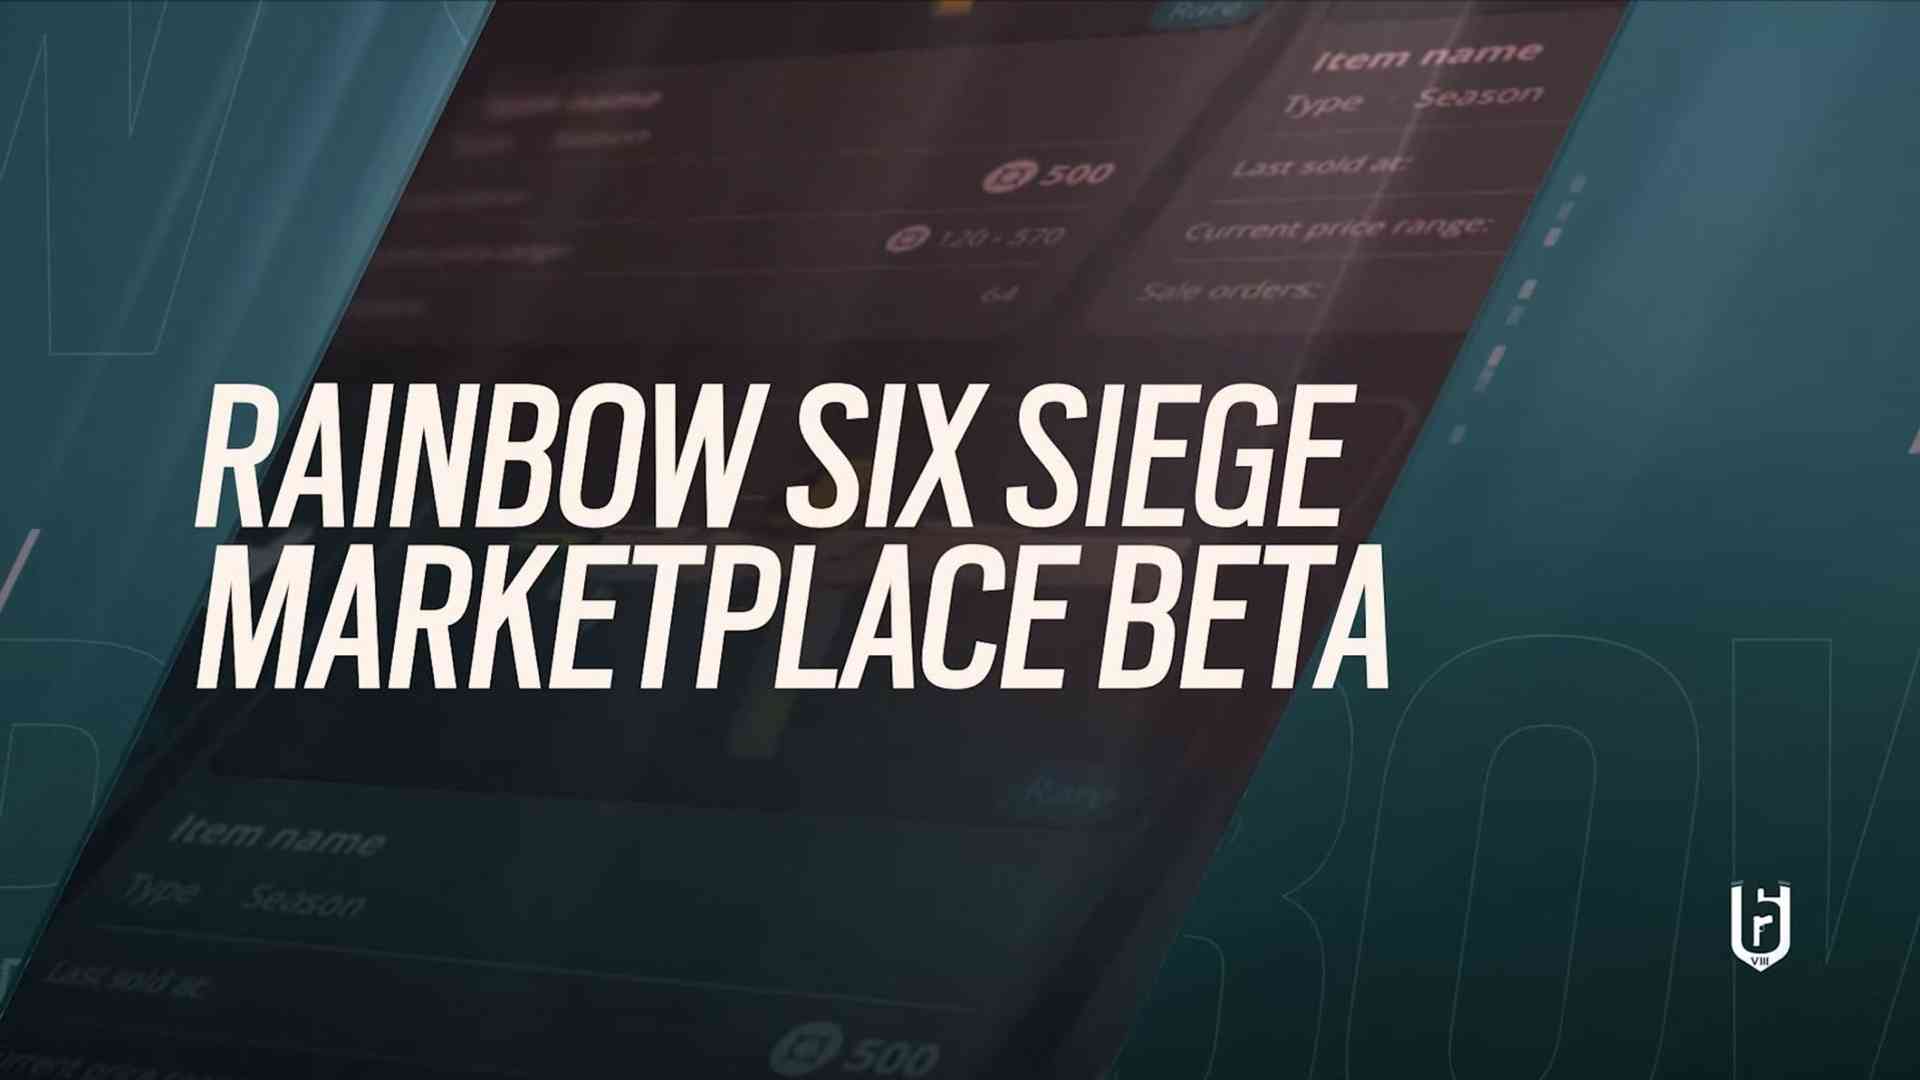 Rainbow Six Siege Y8S4 Operation Deep Freeze: Release date, new